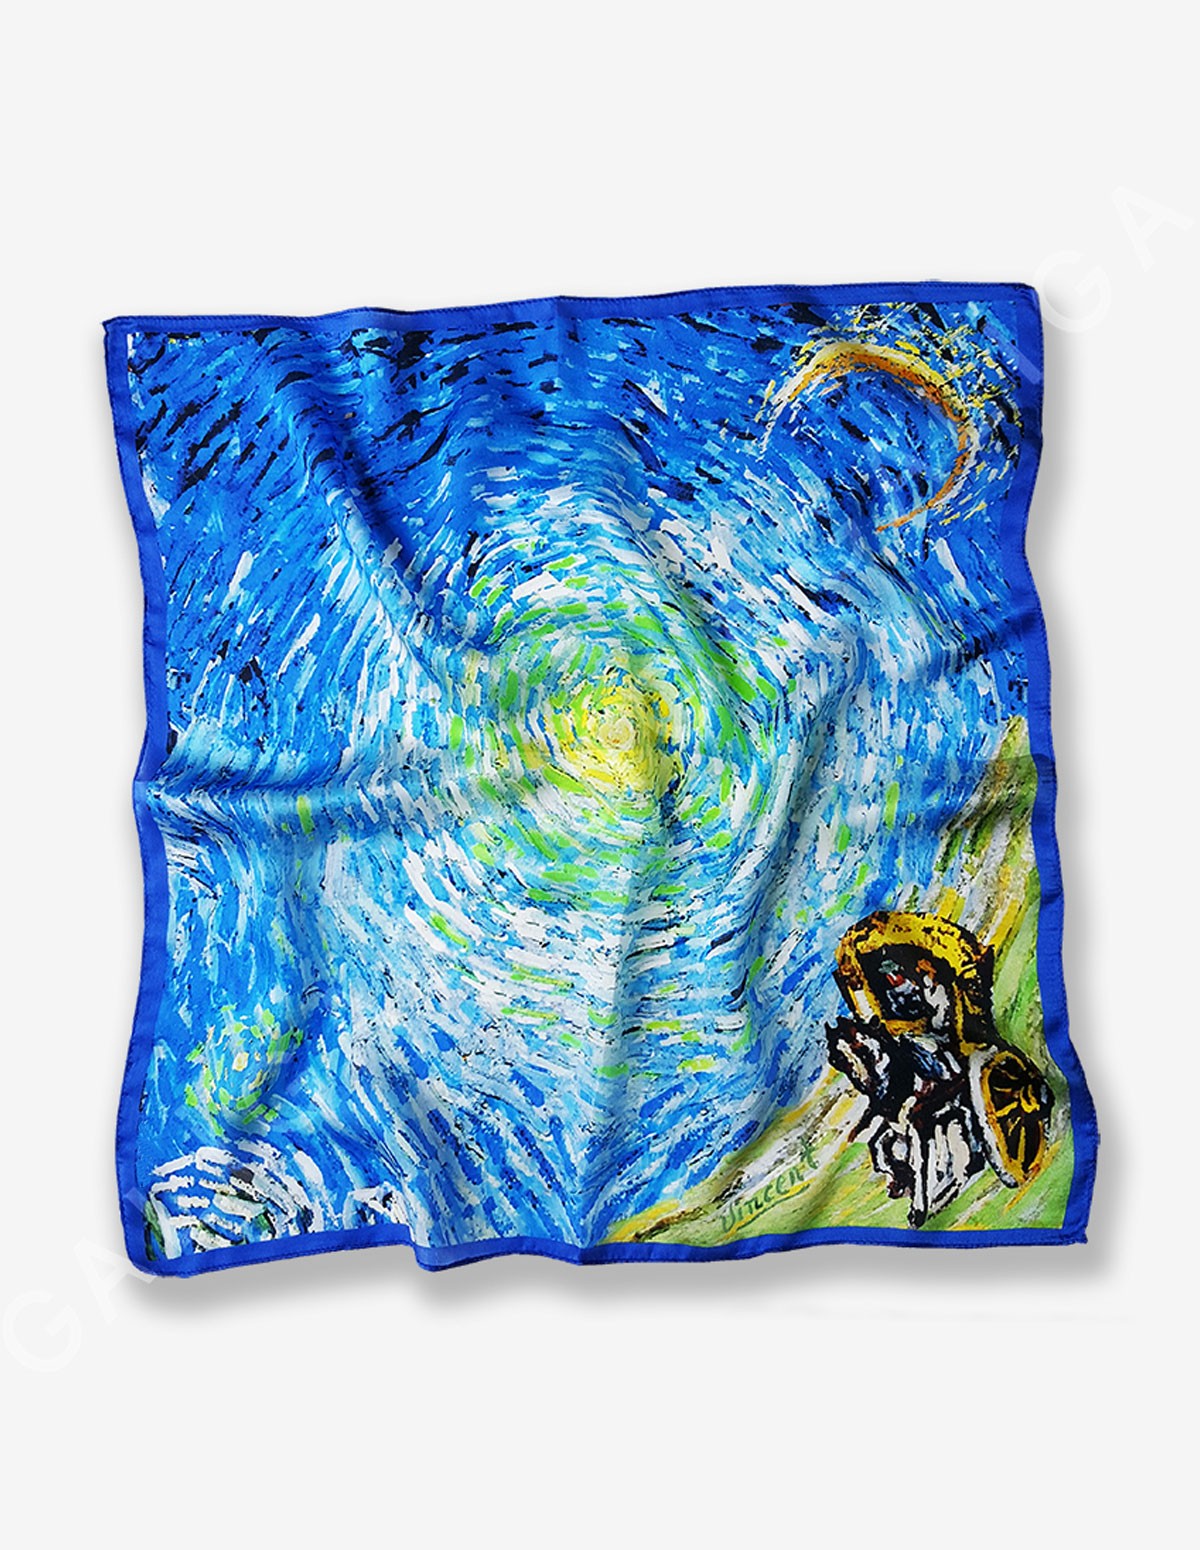 Vincent Van Gogh Starry at Eddy Tablo İpek Fular 55x55